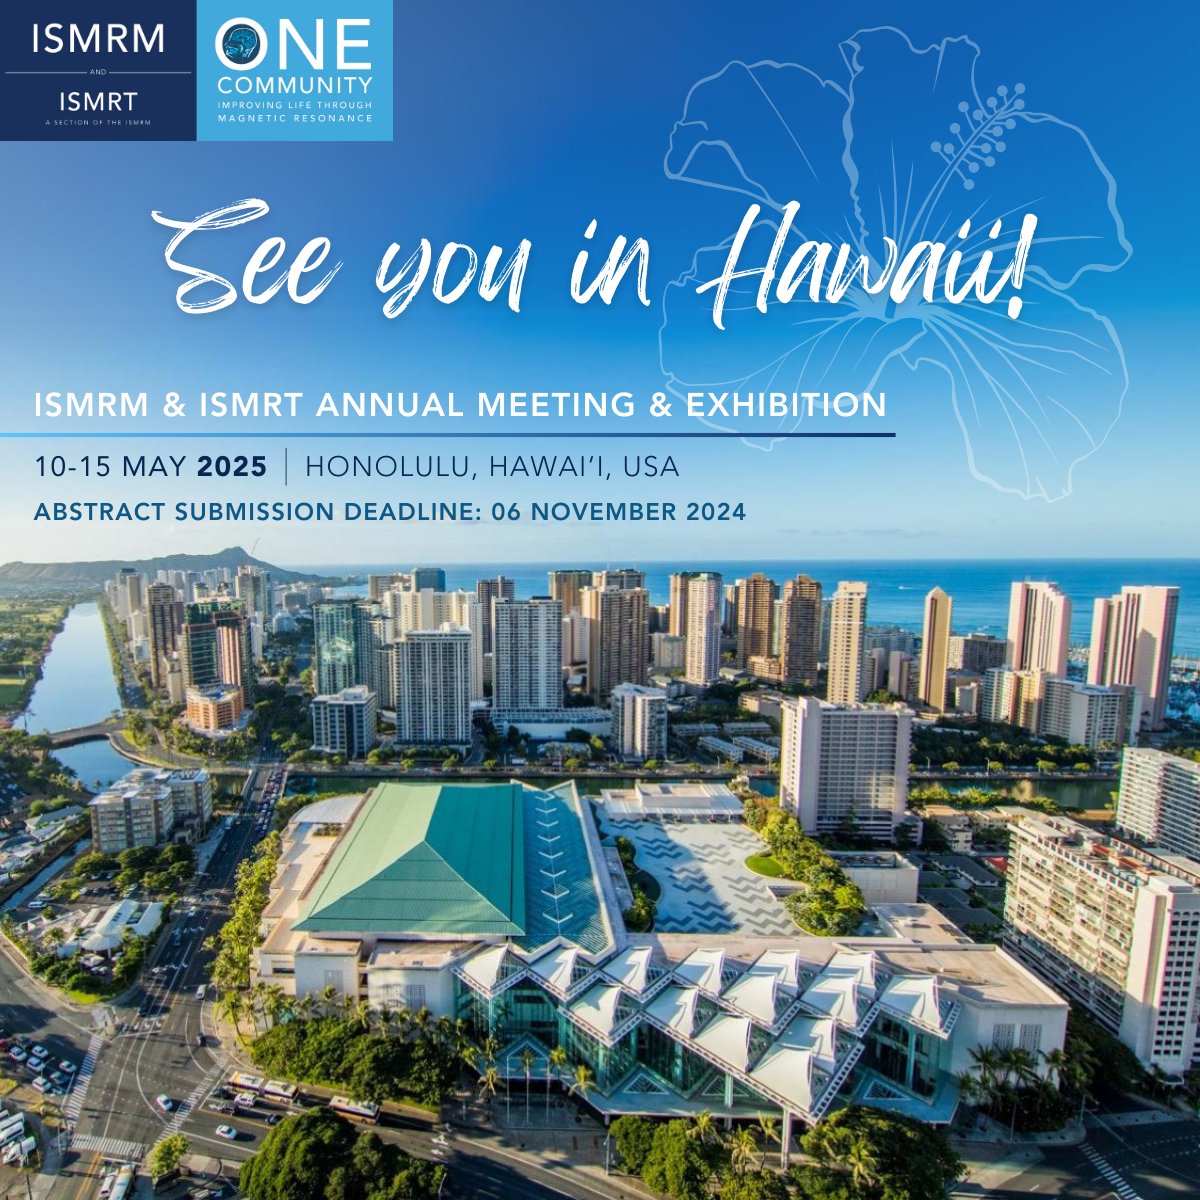 See you in Honolulu, Hawai'i for the 2025 ISMRM & ISMRT Annual Meeting & Exhibition!

#ISMRM #ISMRT #MRI #MagneticResonance #MR #MedicalImaging